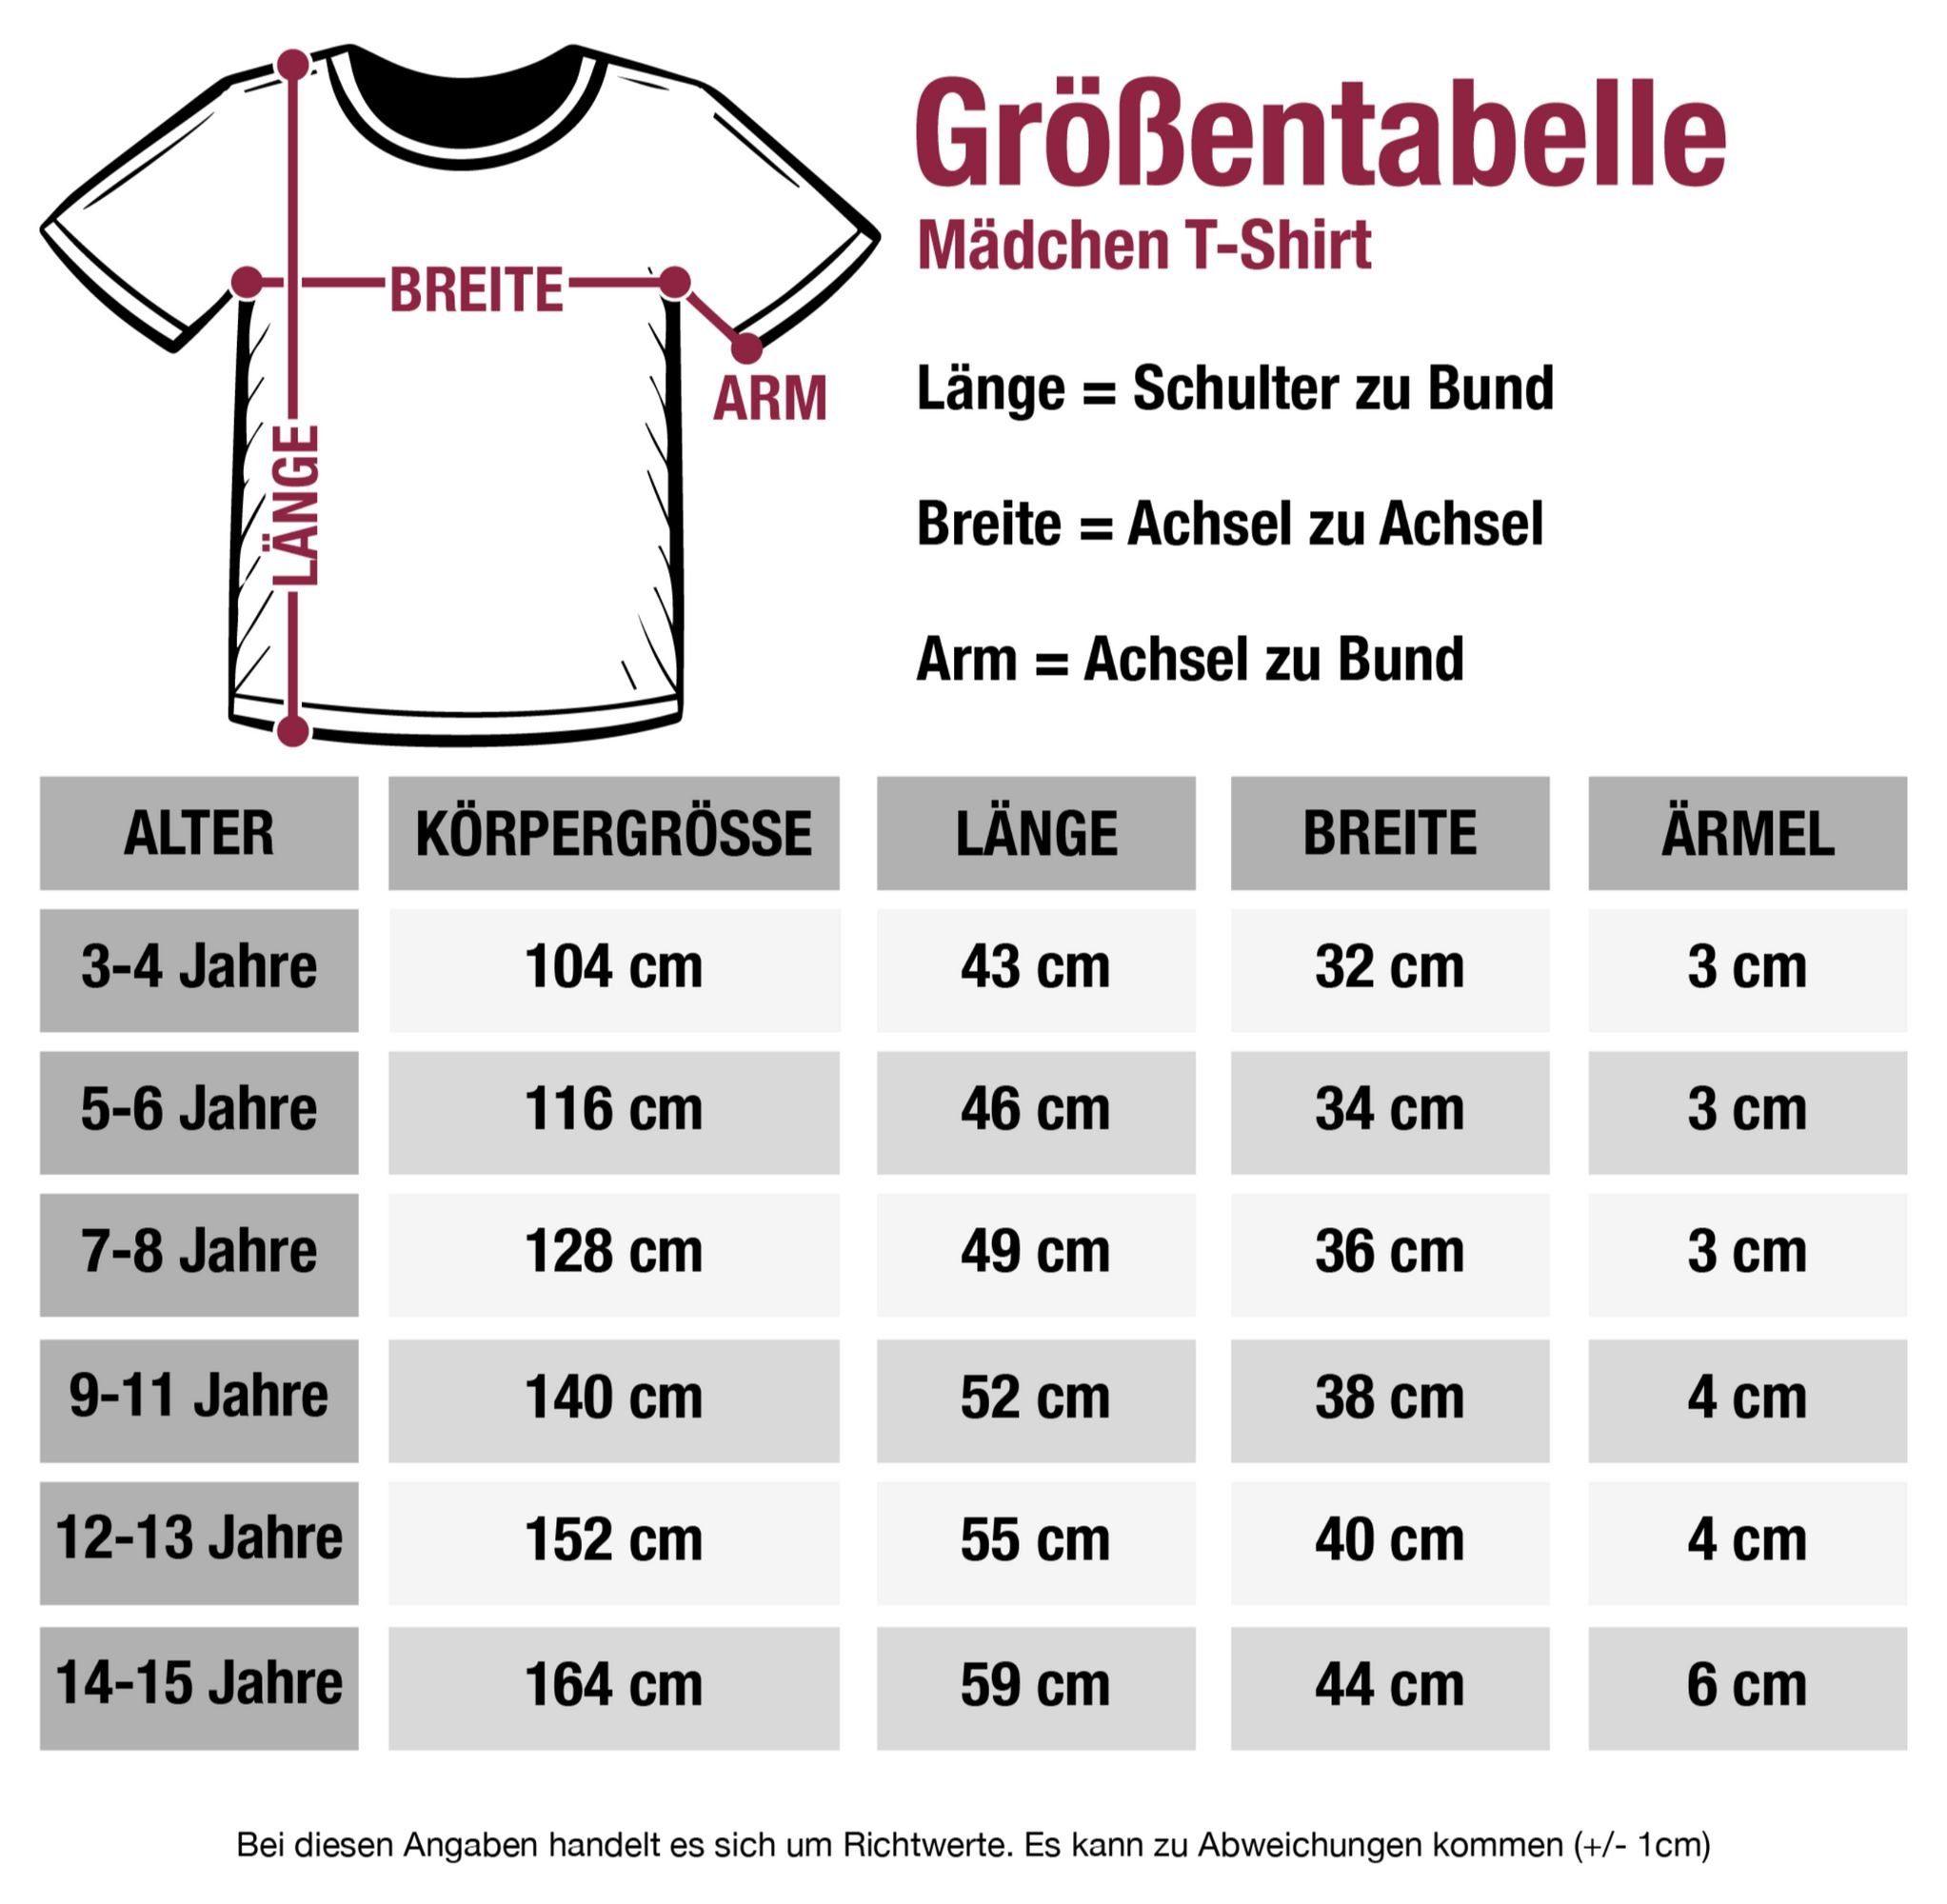 Shirtracer Fuchsia schwarz Berg Kinder Sport Der T-Shirt ruft Kleidung - 1